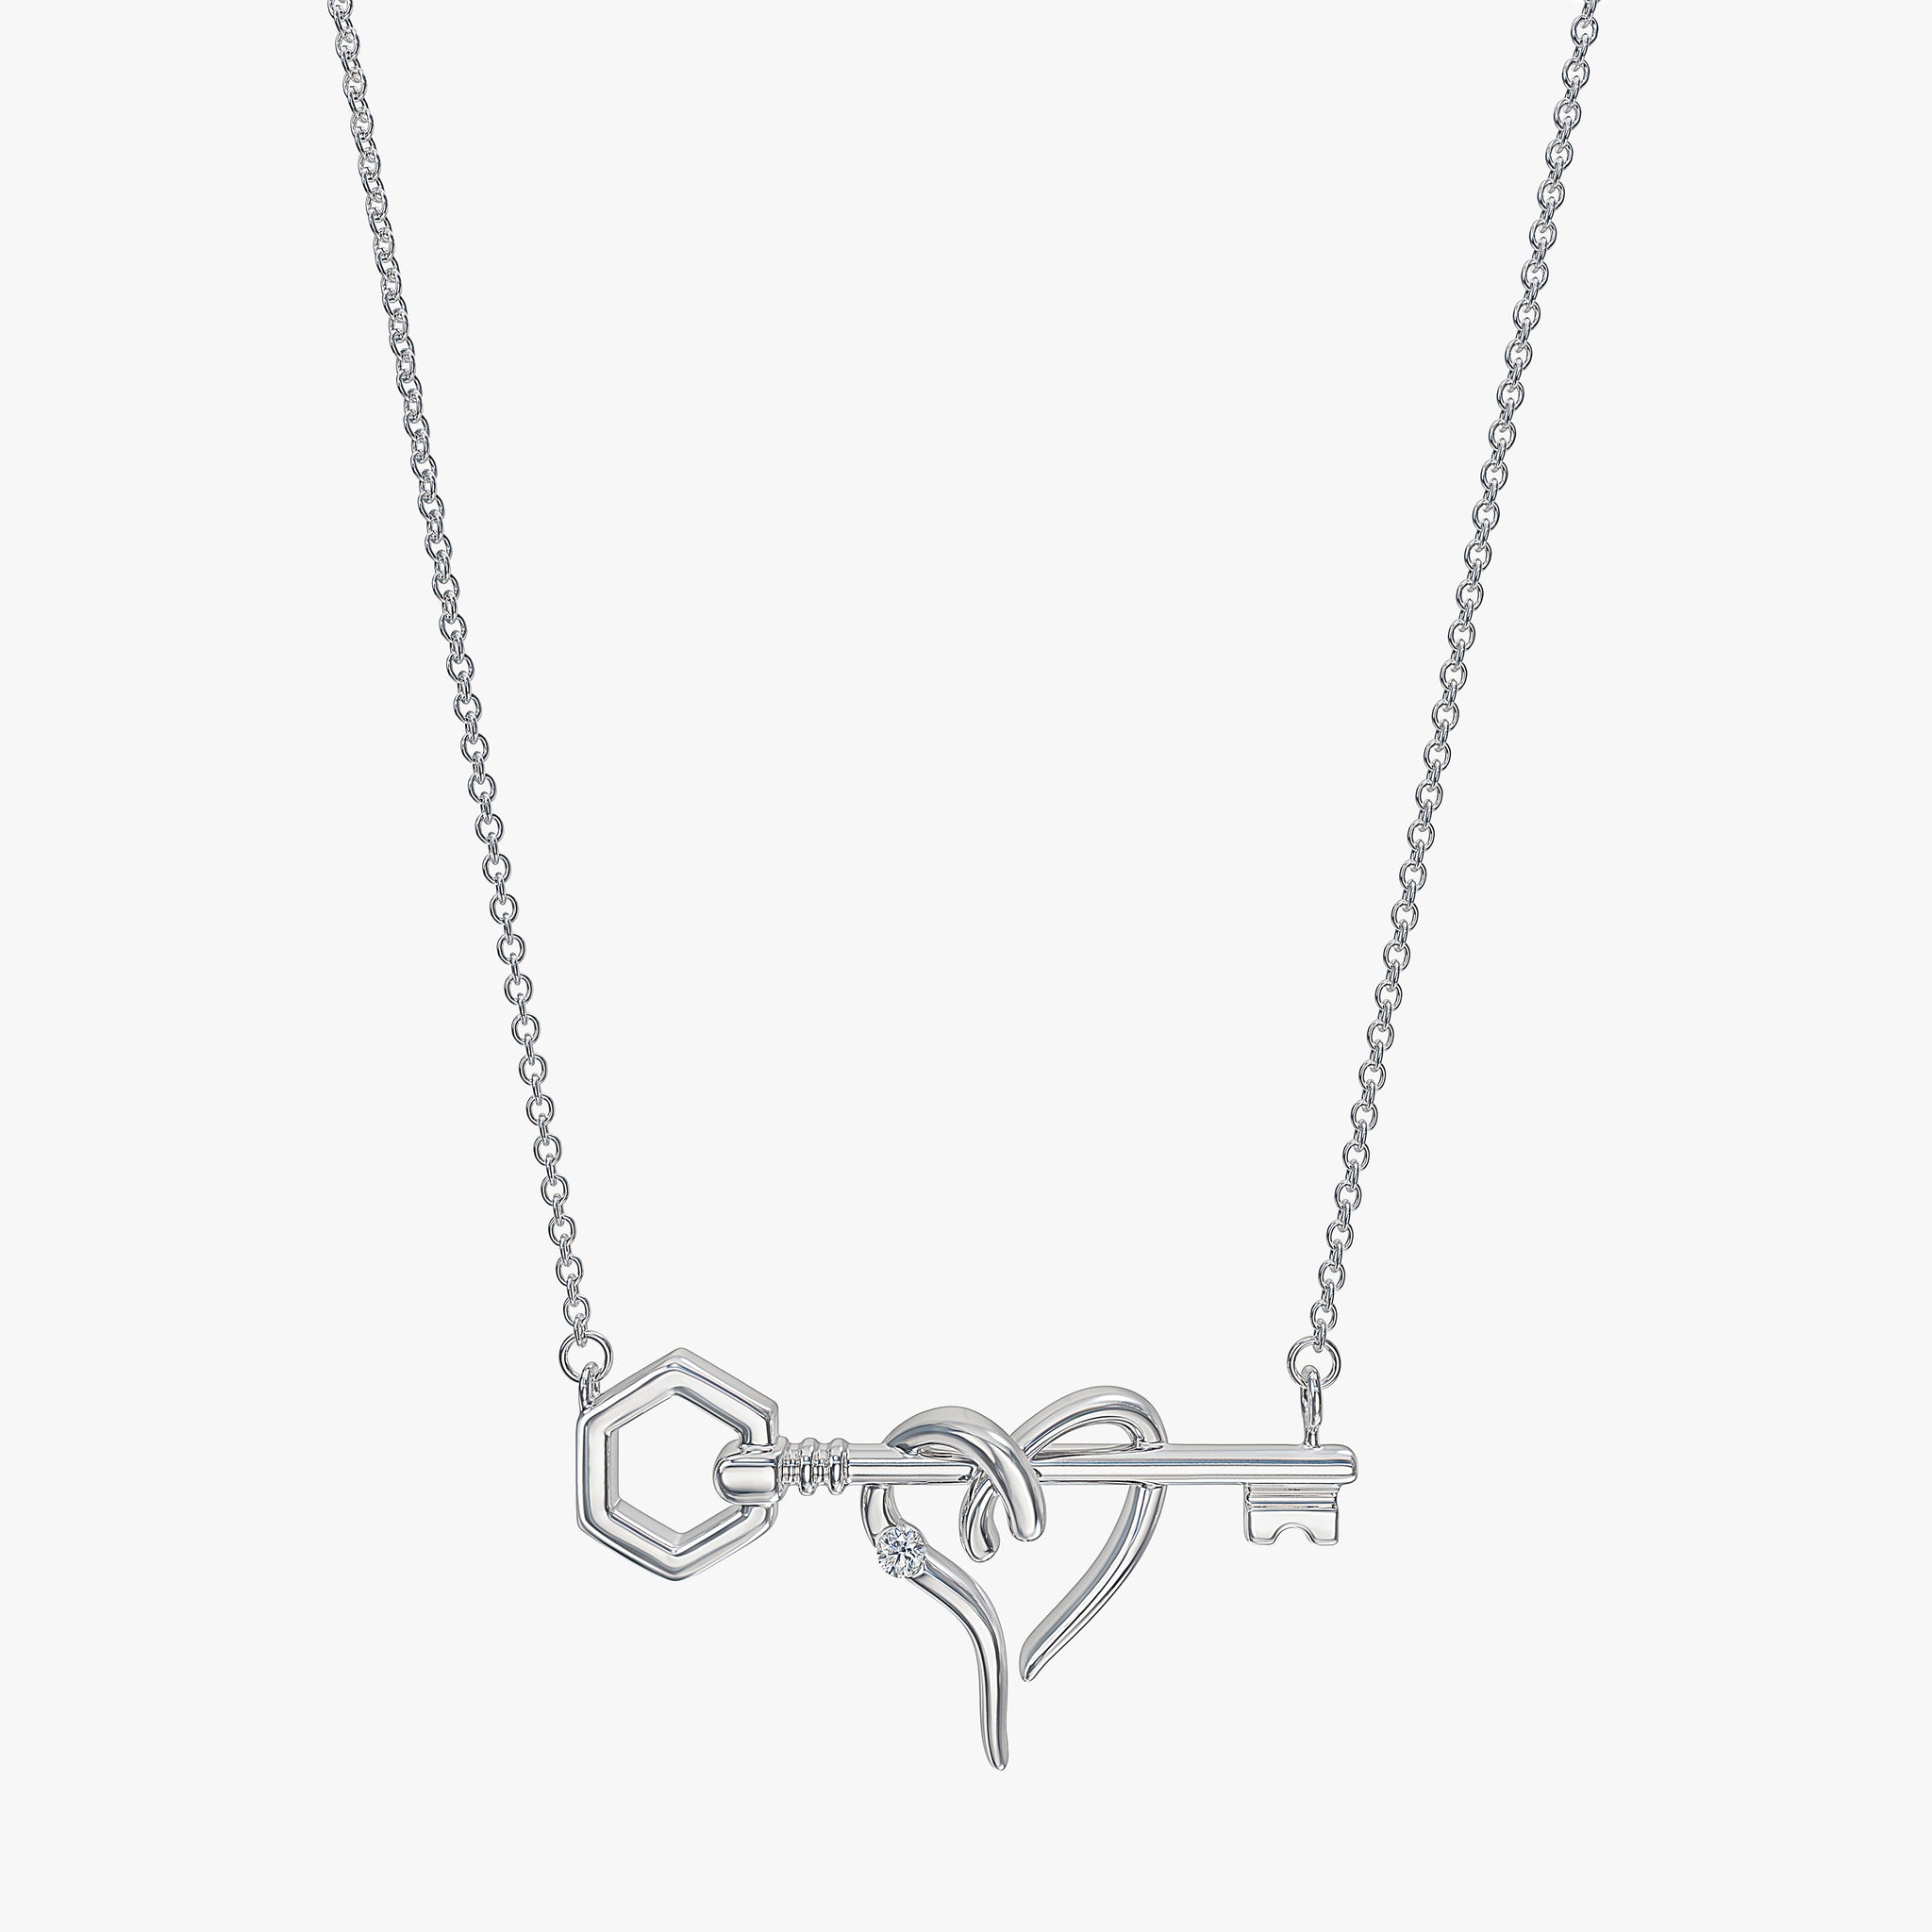 Black & White Diamond Heart Lock & Key Necklace in Sterling Silver